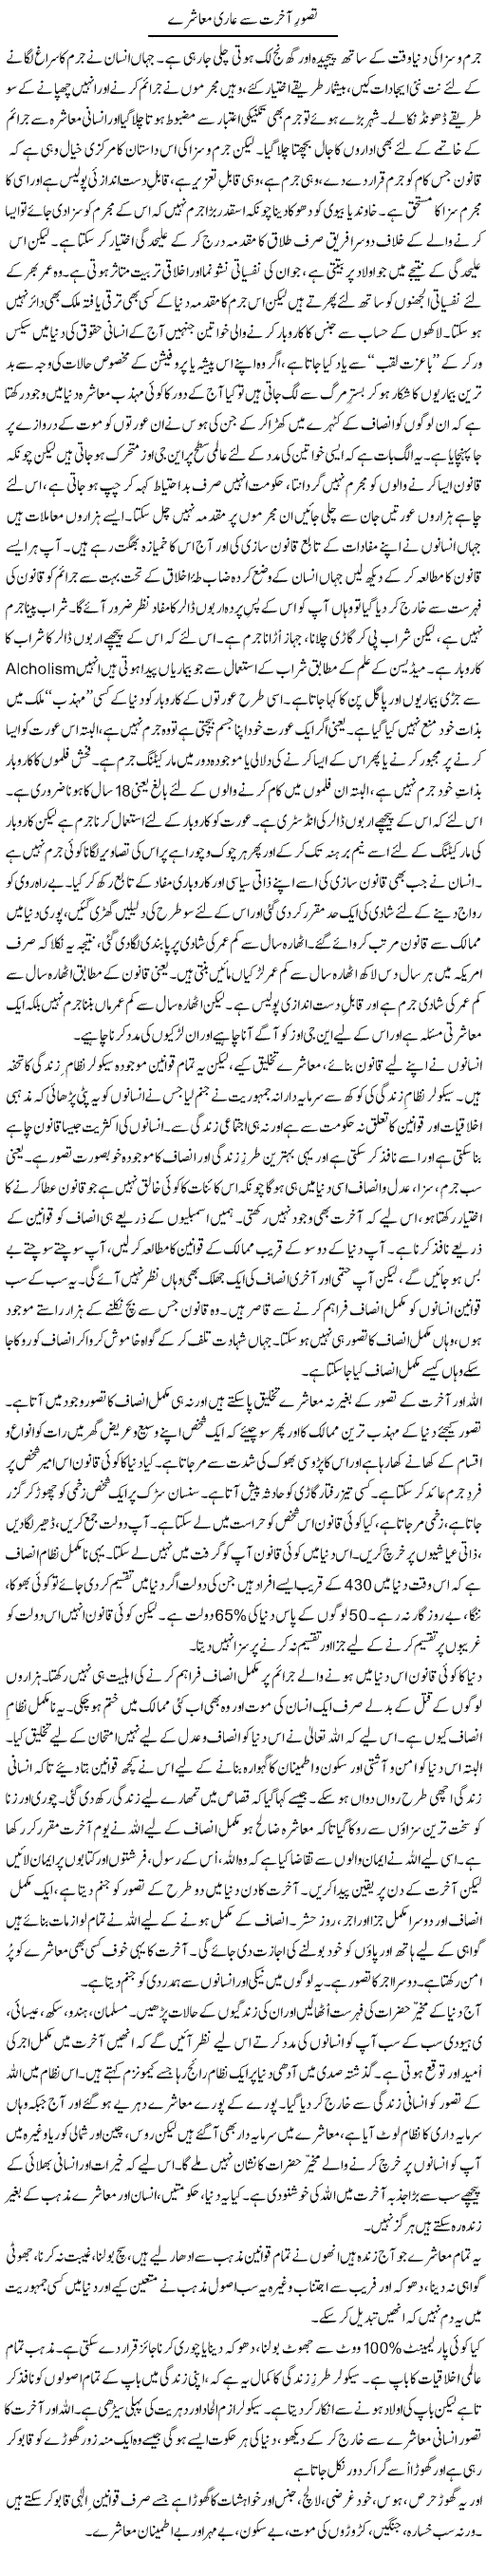 Tasawur akhirat se aari muashray | Orya Maqbool Jan | Daily Urdu Columns